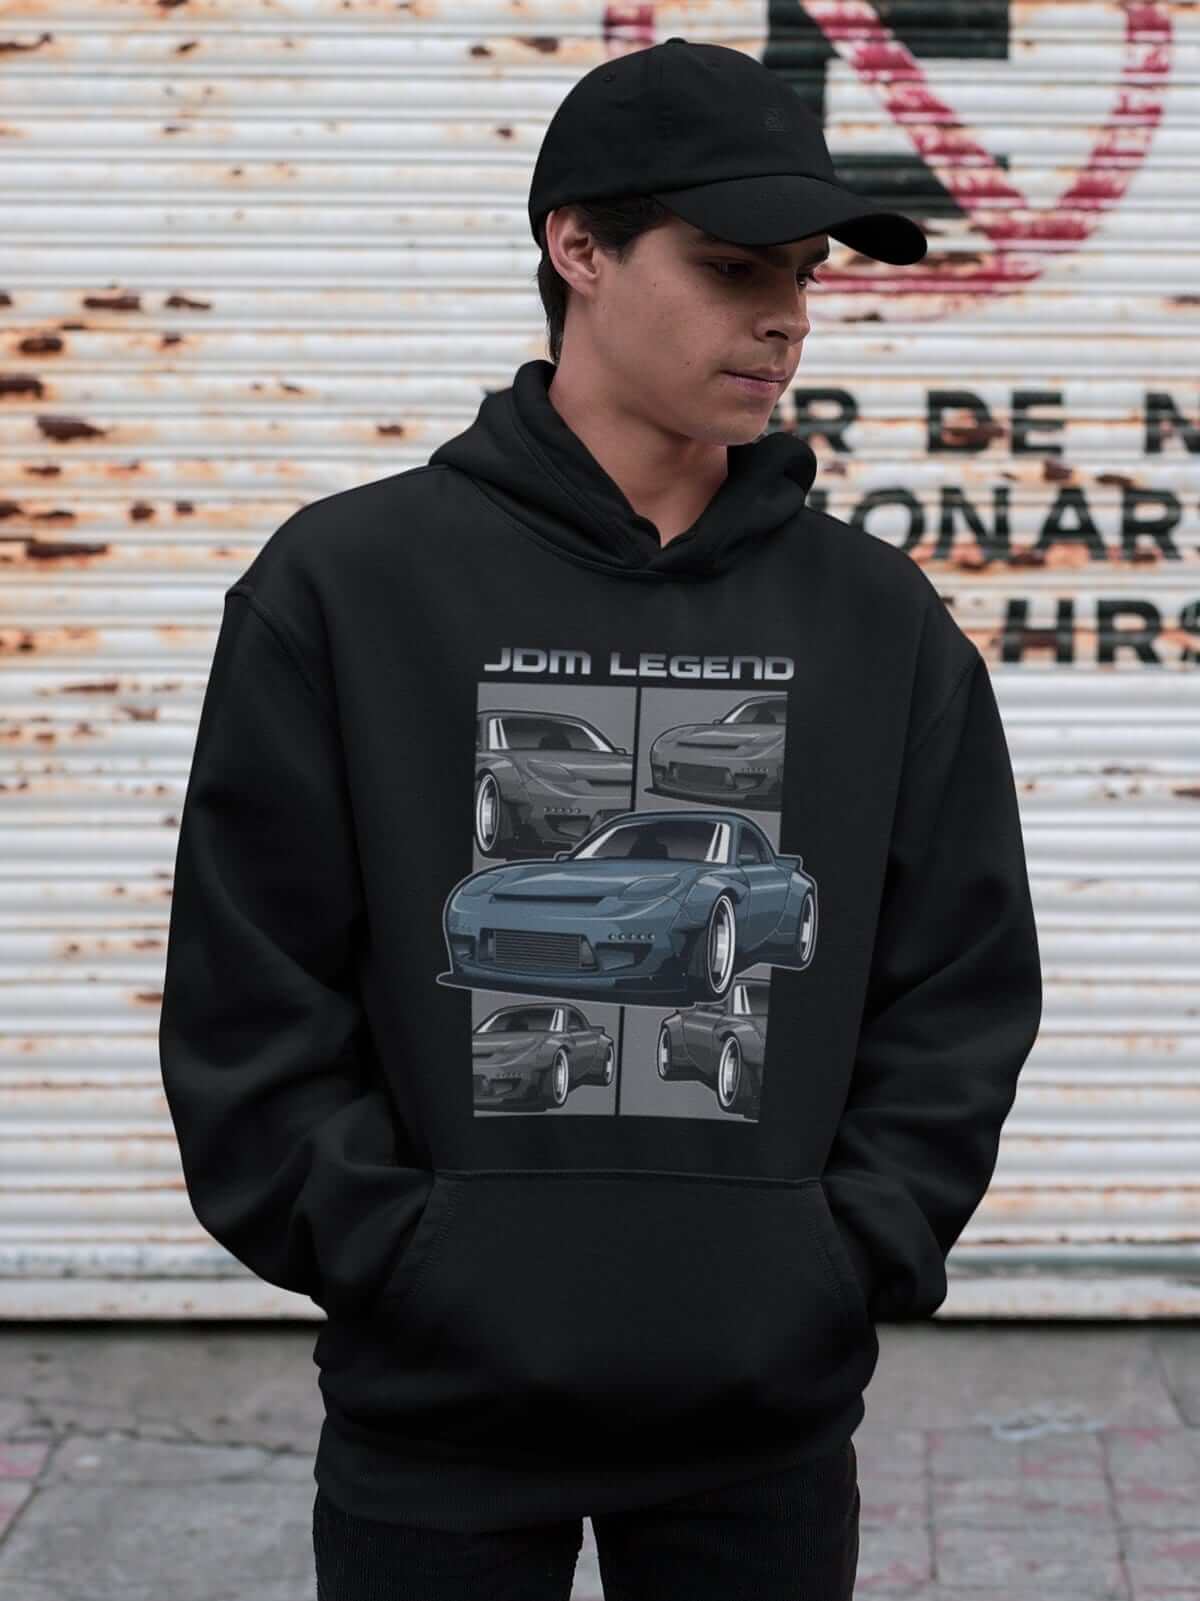 Blue Japanese car printed on a black hoodie, JDM hooded sweatshirt, car guy gift, car lover, car fan, car enthusiast, petrolhead, JDM lover, boyfriend gift idea